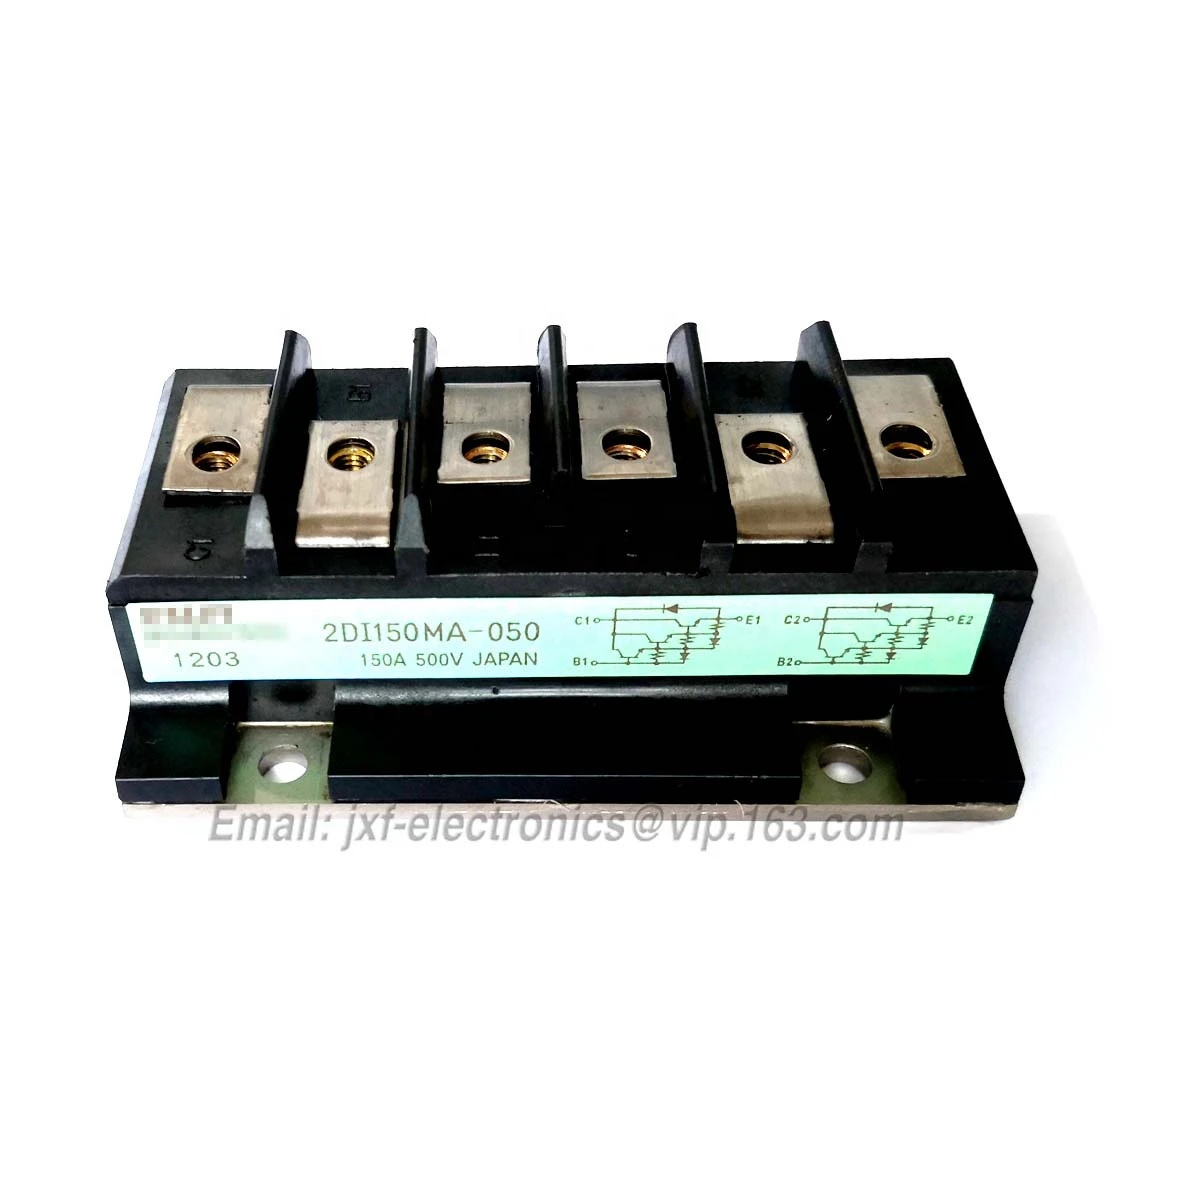 Fuji Power Transistor Module EVM31-050B EVM31-050A EVM31-050 EVM31-060B 2DI150MA-050 2DI150MA-050-01